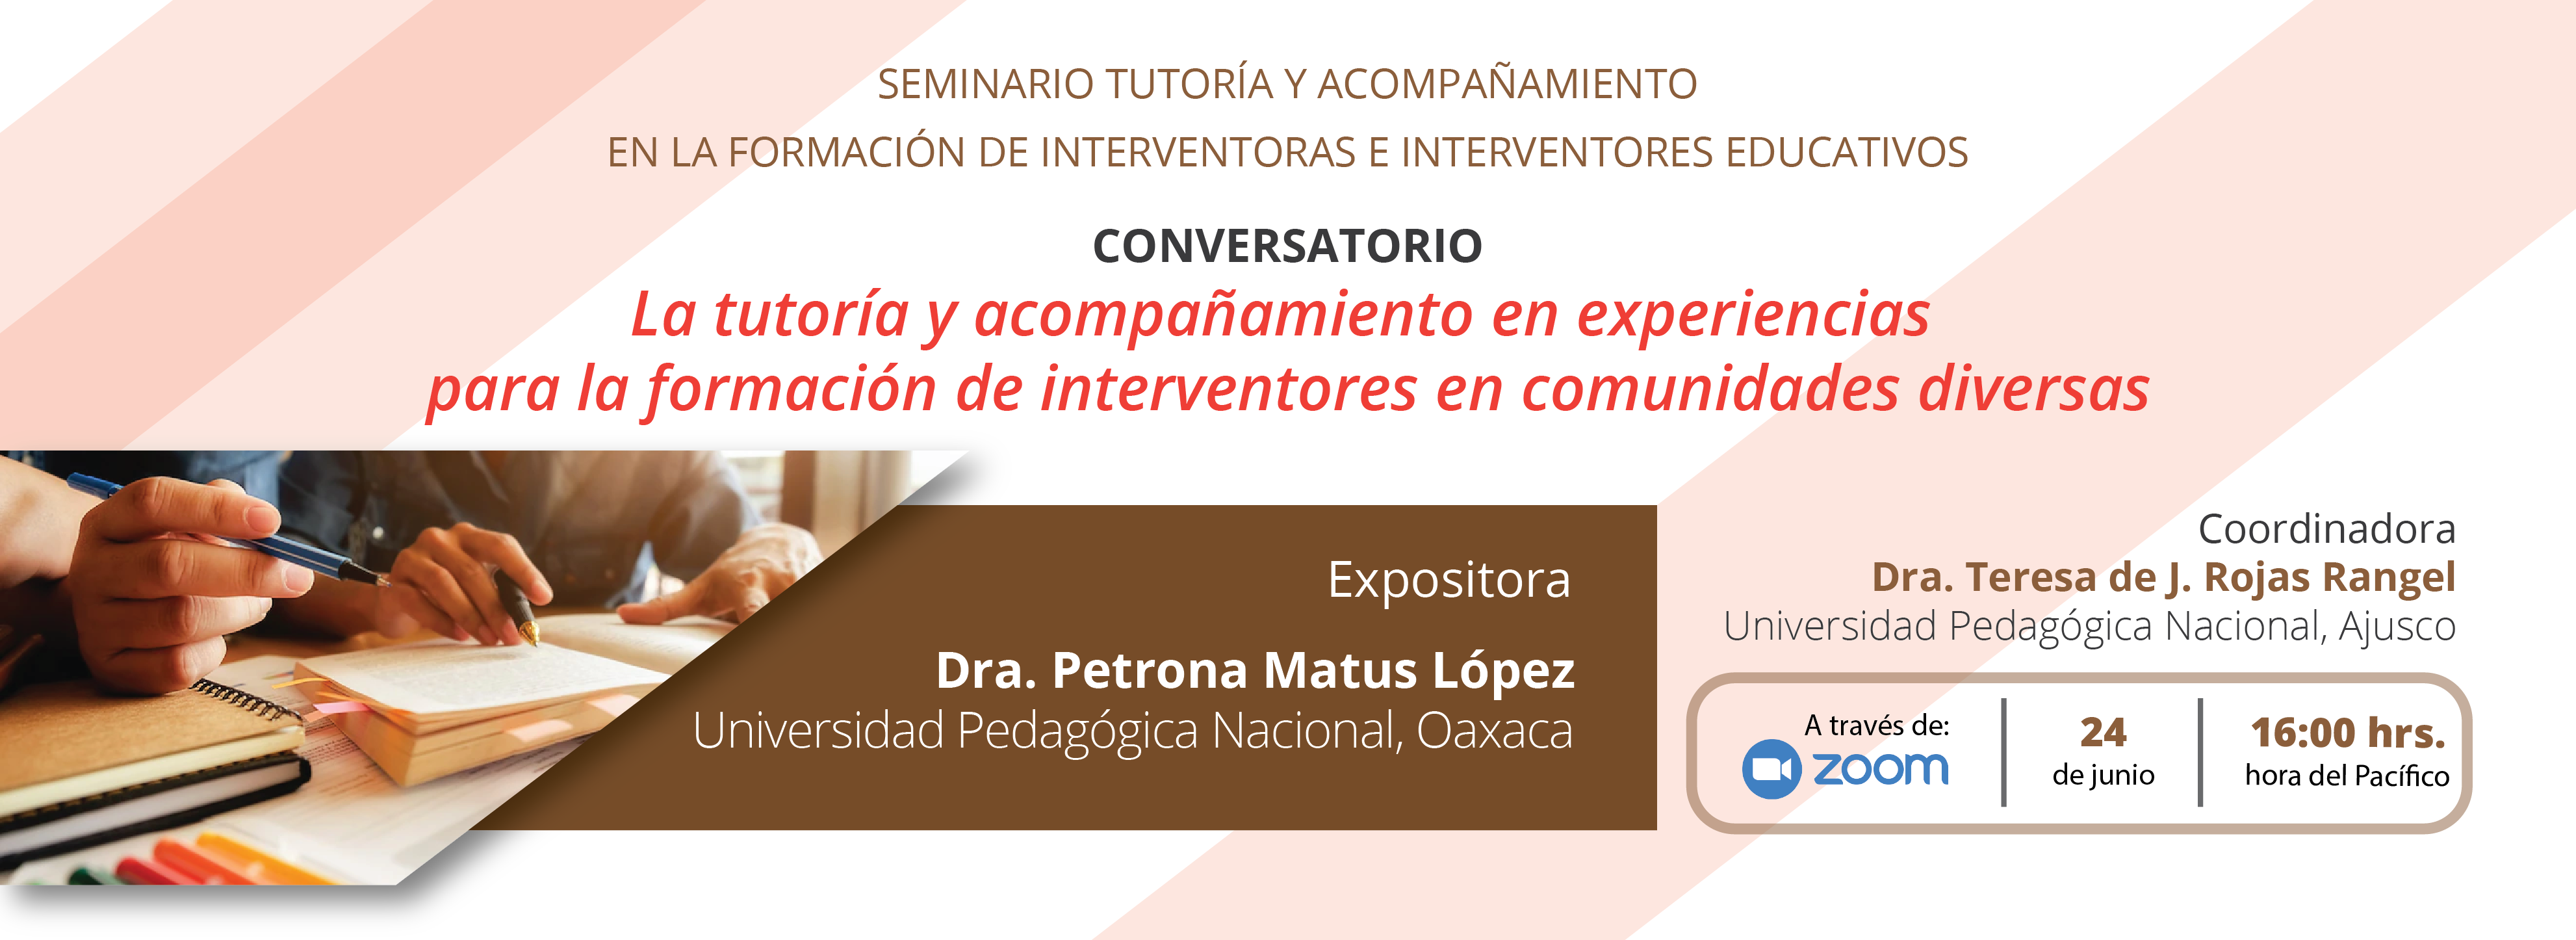 Invitacion_Seminario_Conversatorio_Dra_Petrona_Matus_Lopez_banner_web